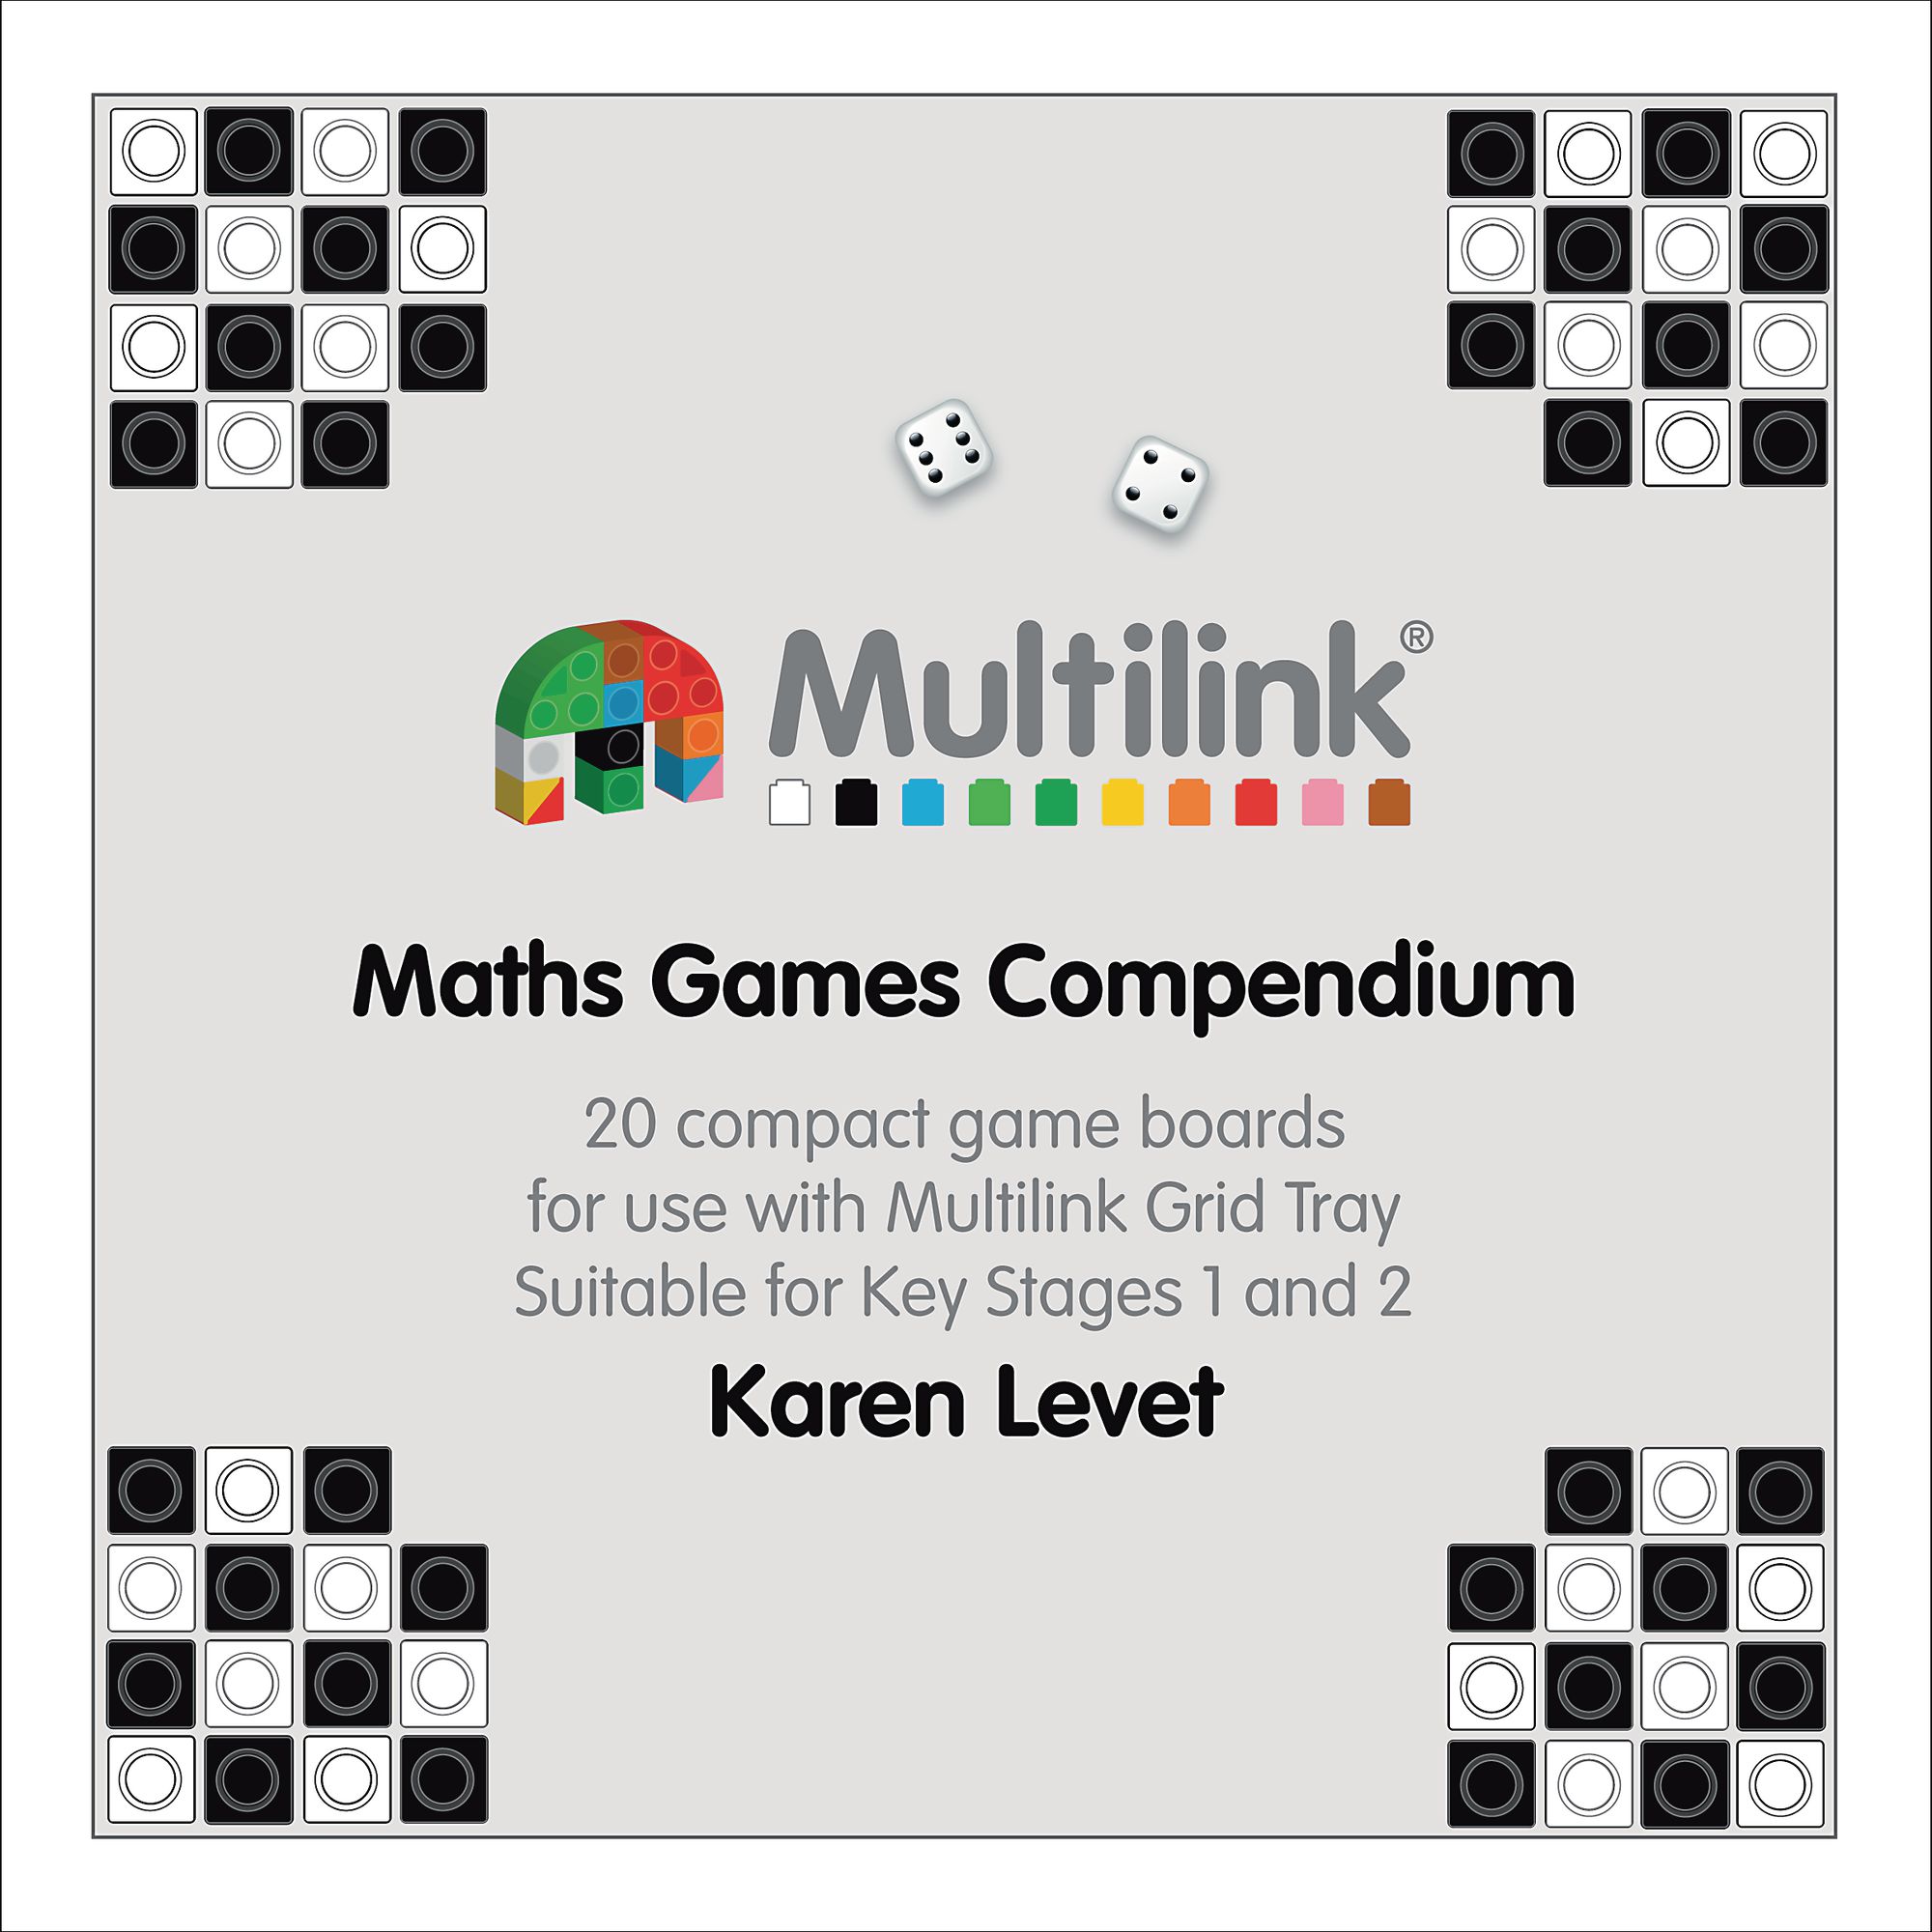 Multilink Maths Games Compendium